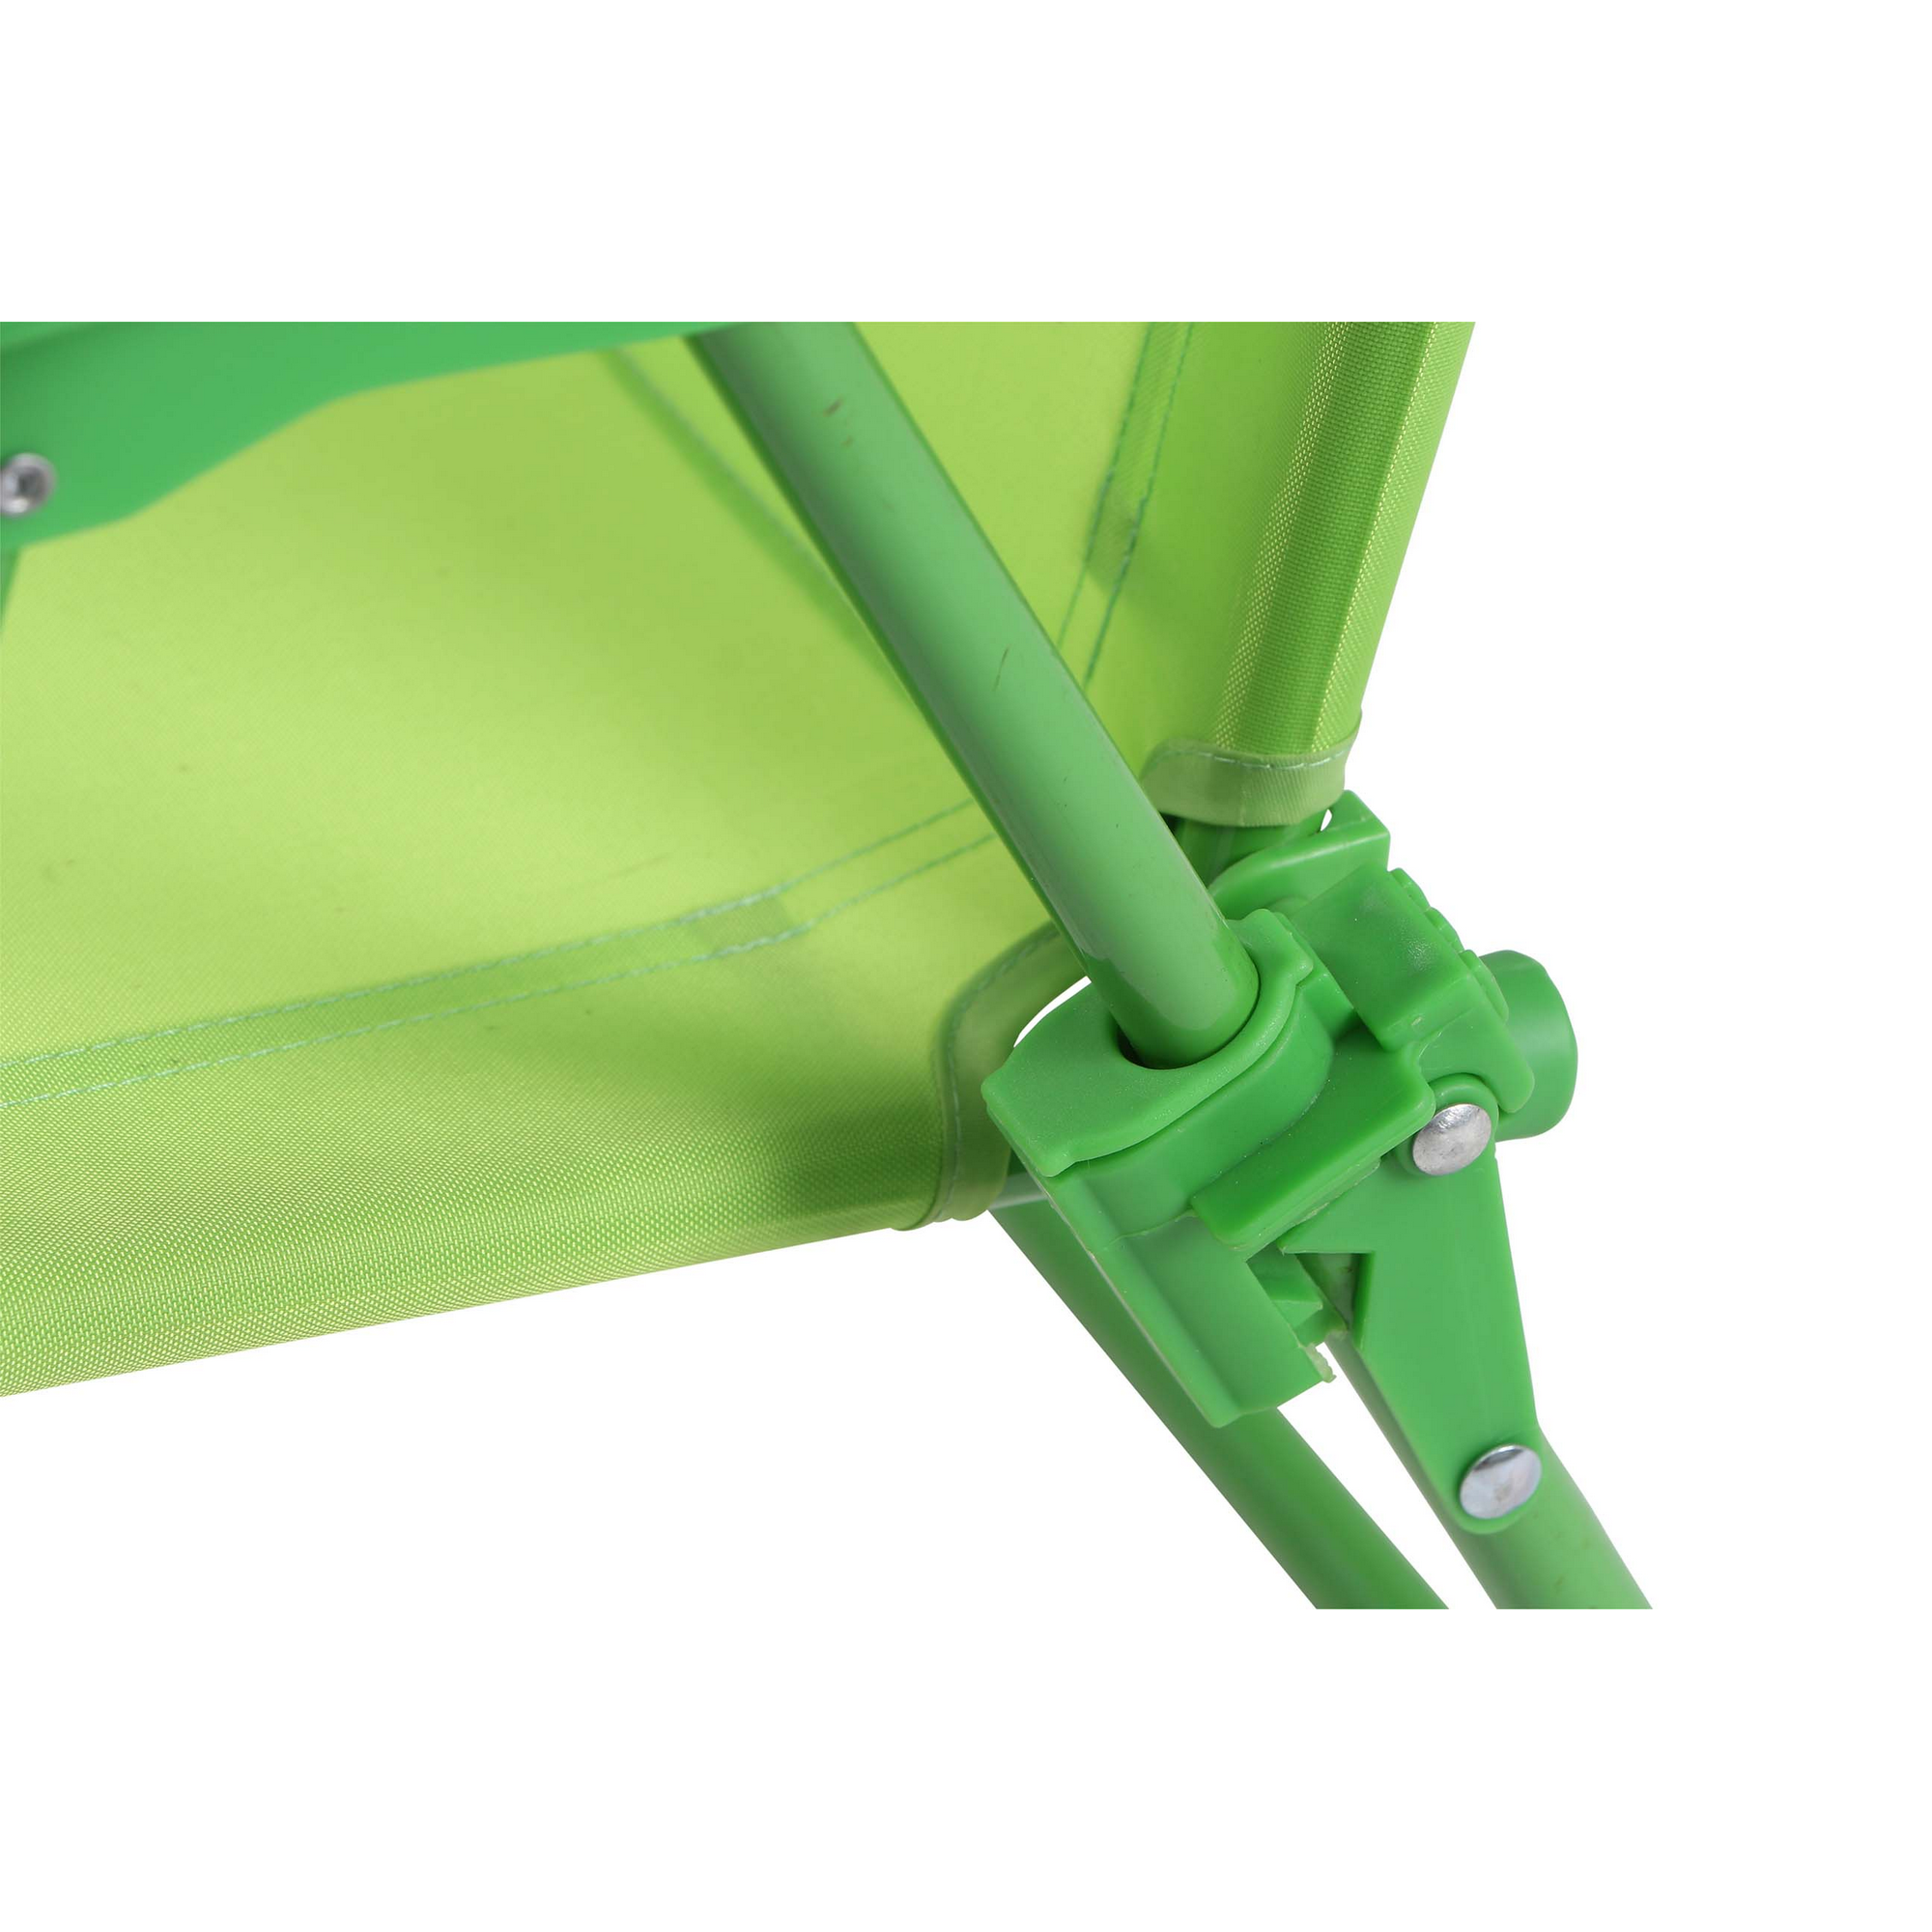 Kindersitzgruppe 'Froggy' grün, 4-teilig + product picture